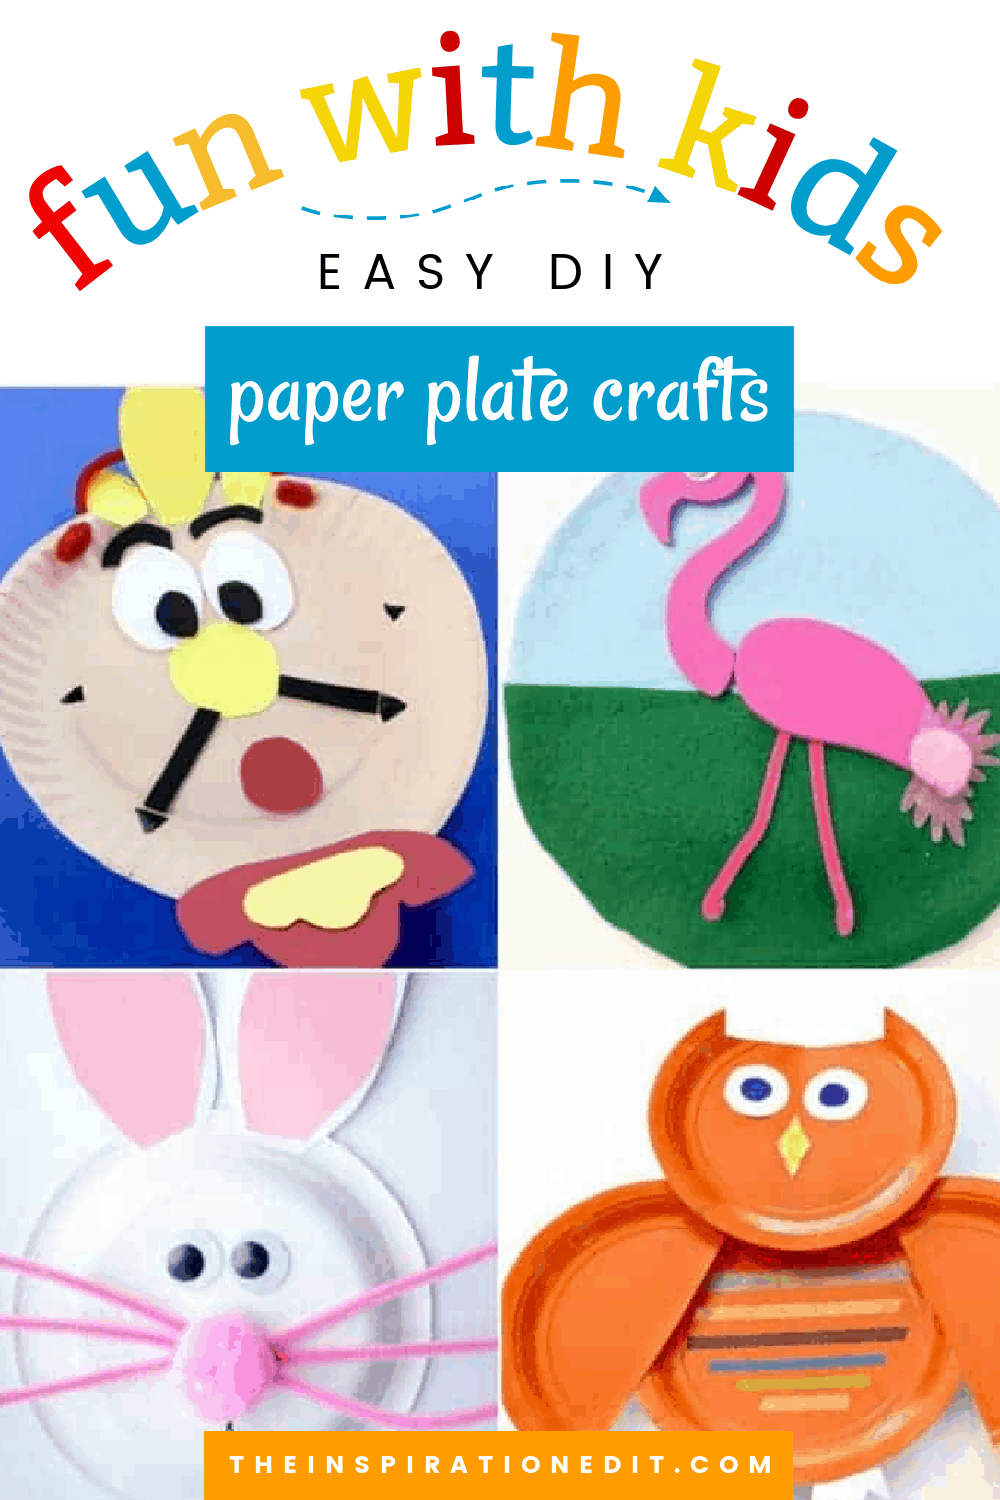 Paper Plate Animals, Kids' Crafts, Fun Craft Ideas